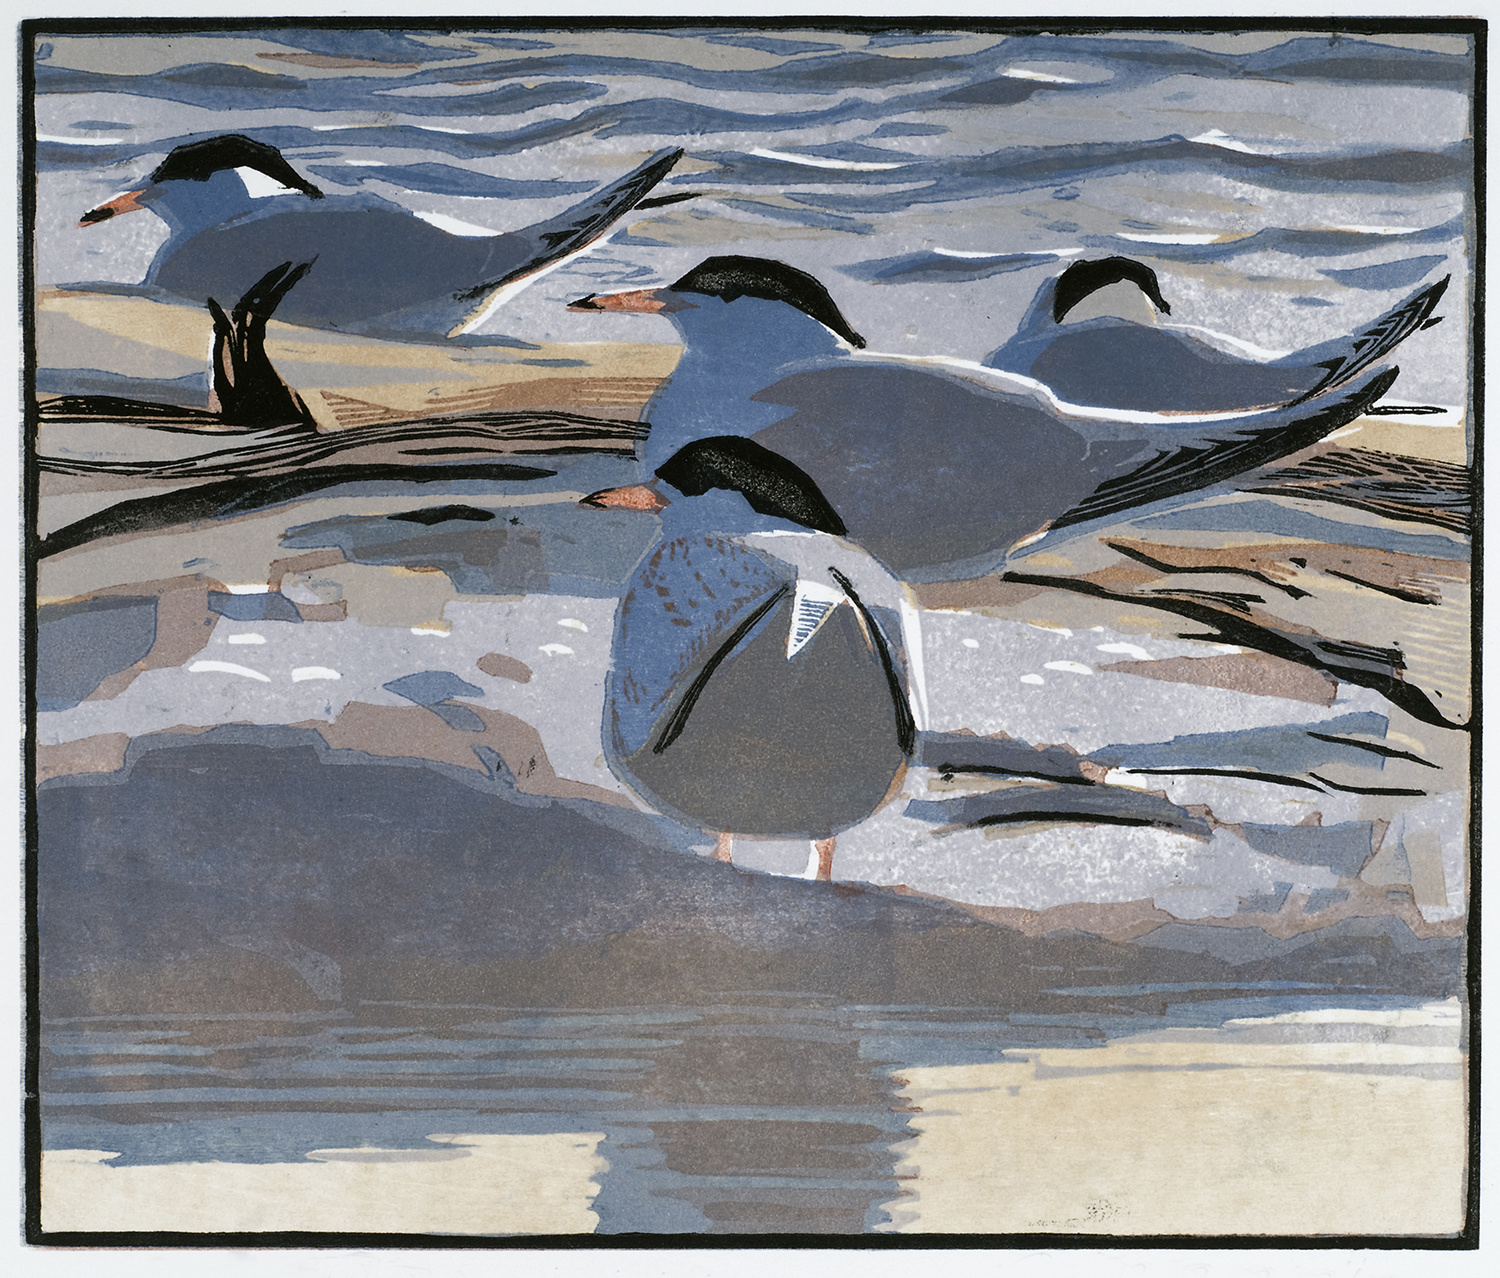 Common Terns by Robert Greenhalf